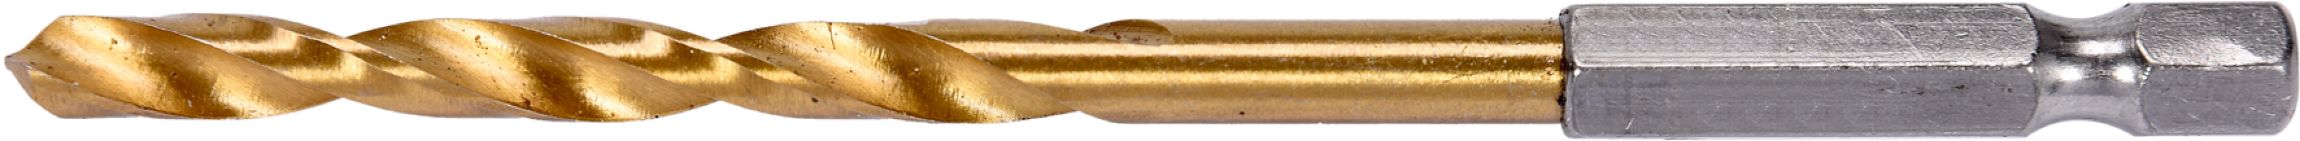 Vrtk do kovu HSS-titan 12,0mm se estihranou stopkou 1/4" Yato YT-44774